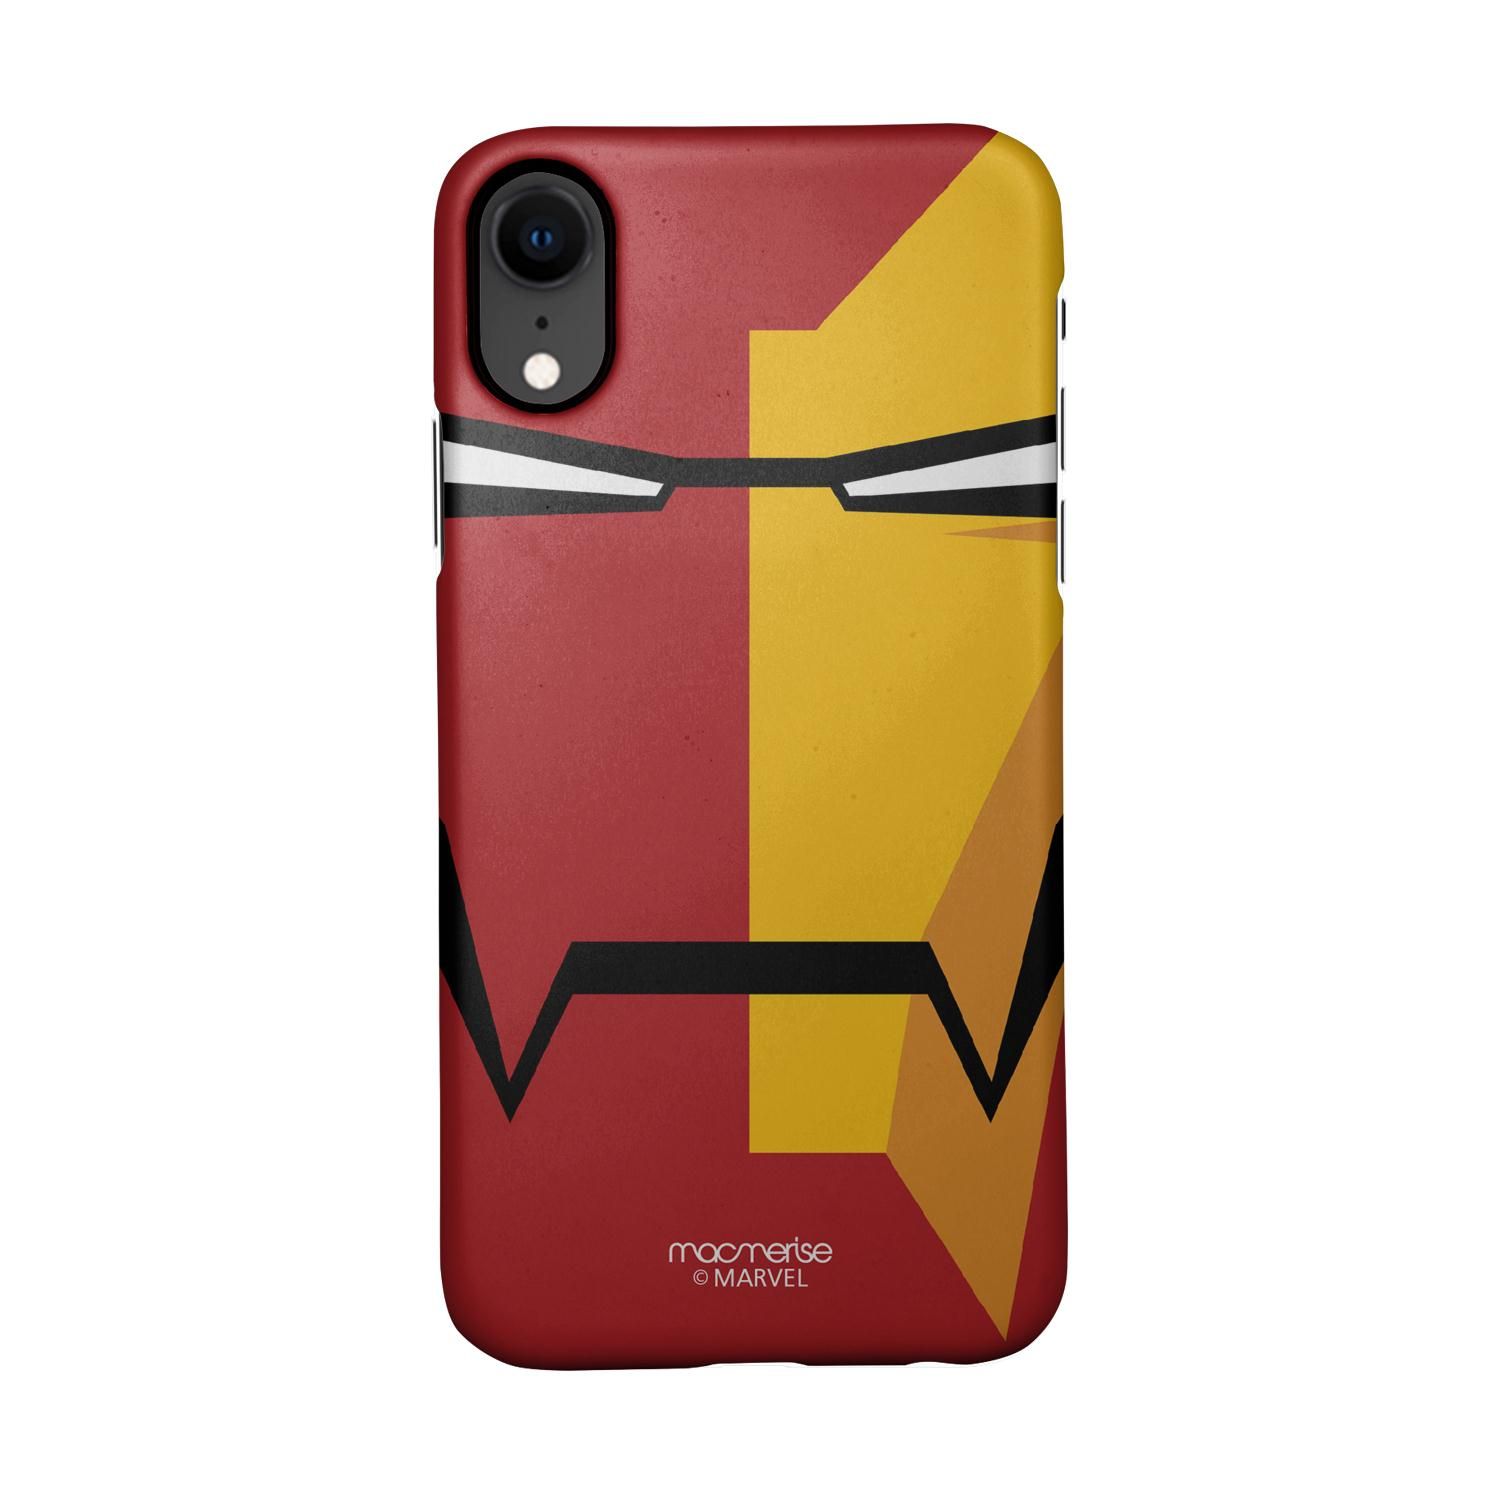 Buy Face Focus Ironman - Sleek Phone Case for iPhone XR Online